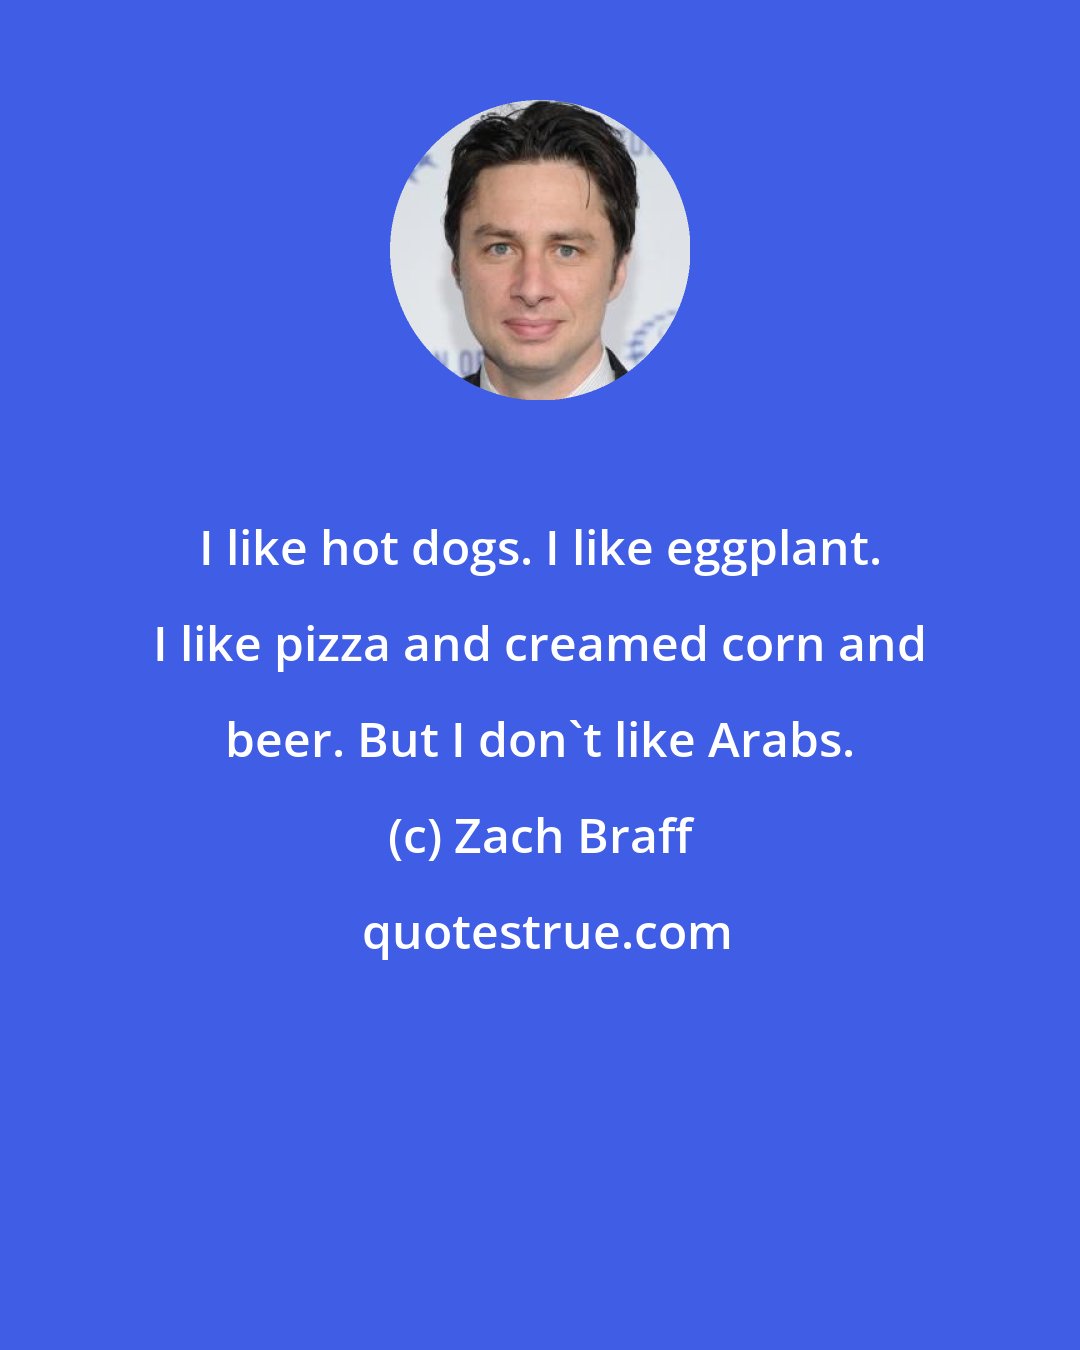 Zach Braff: I like hot dogs. I like eggplant. I like pizza and creamed corn and beer. But I don't like Arabs.